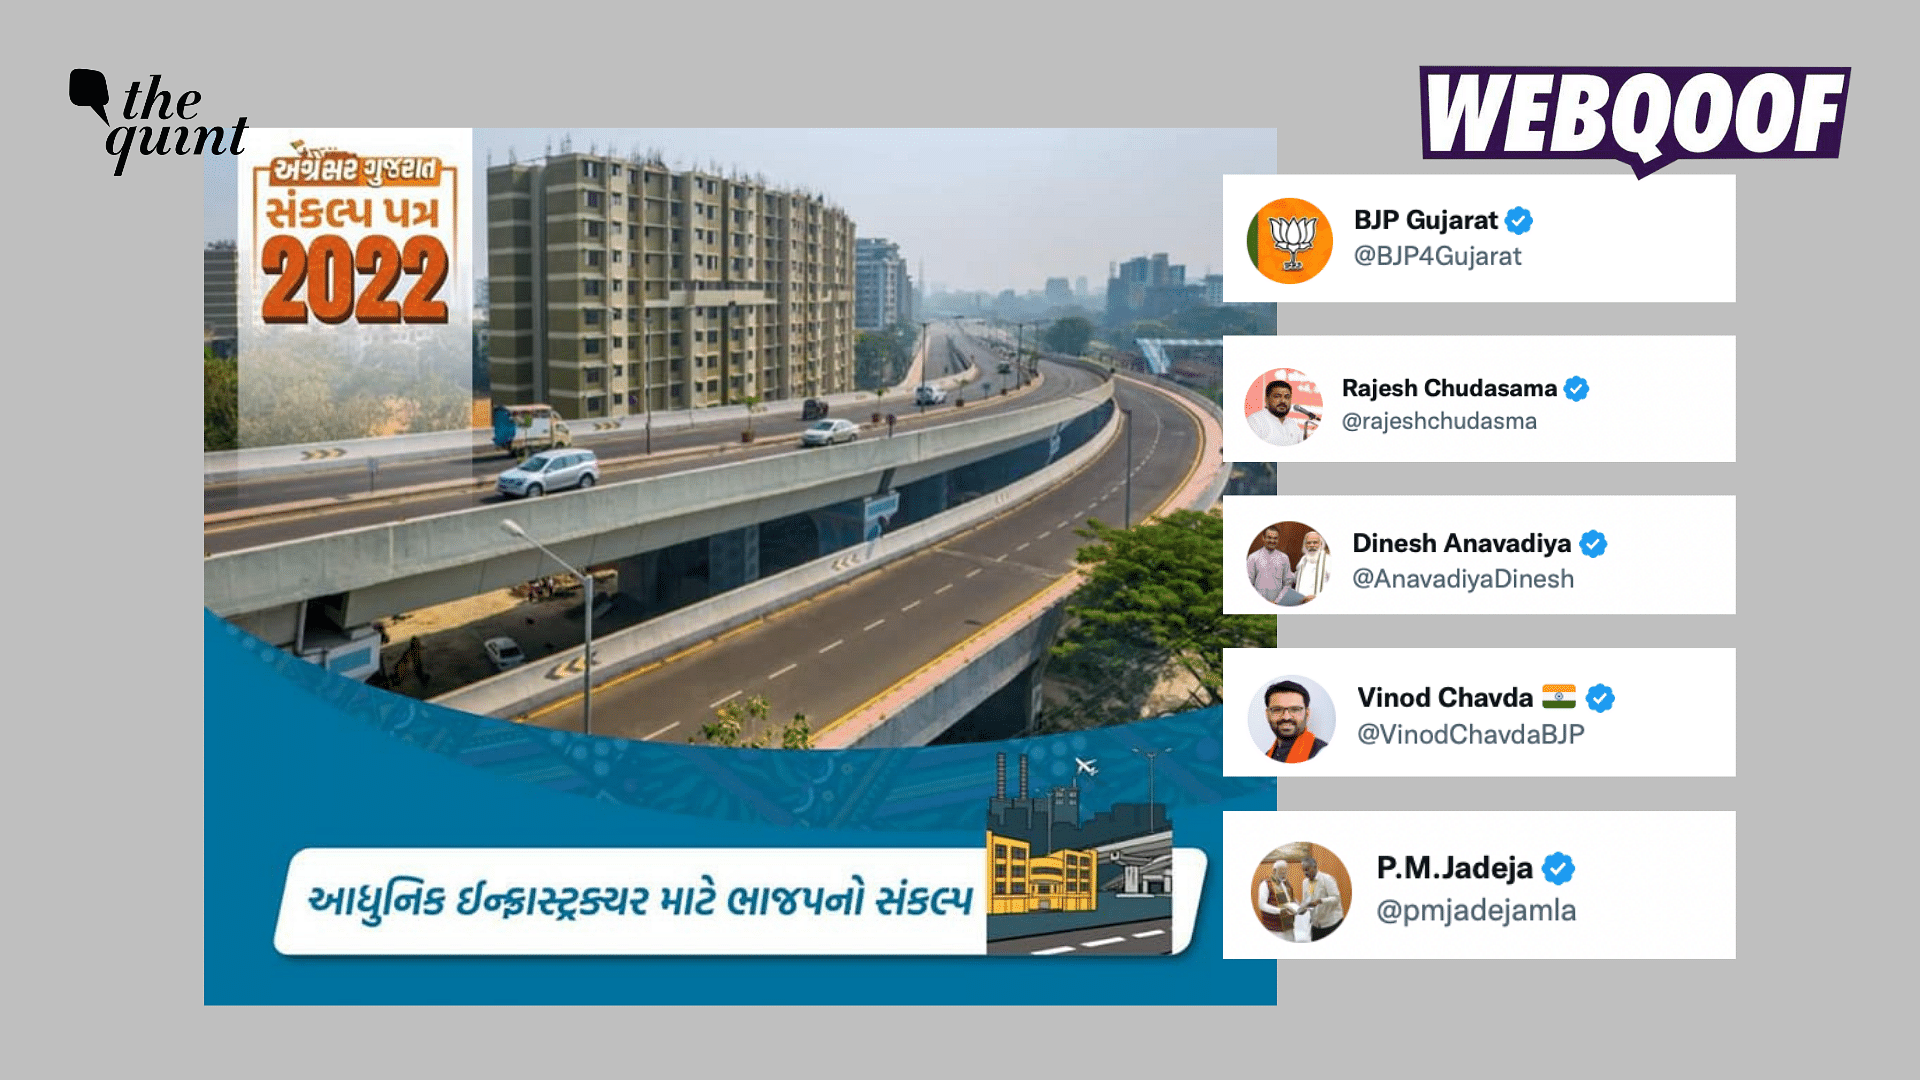 <div class="paragraphs"><p>The photo shows the Santacruz-Chembur Link Road in Tilak Nagar in Mumbai, Maharashtra.</p></div>